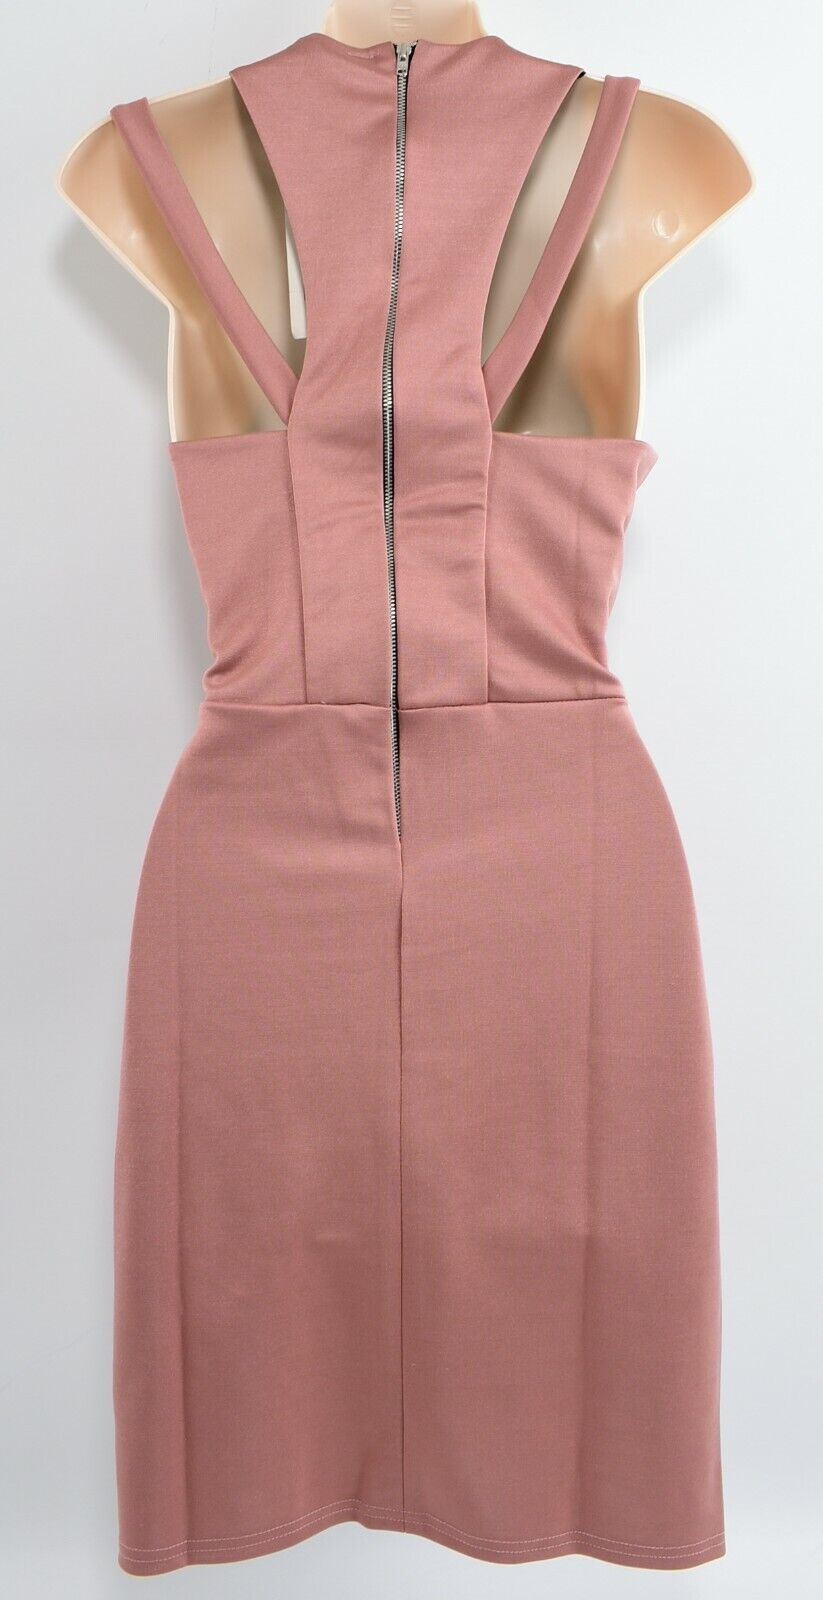 MISS SELFRIDGE Women's Shoulder Cut-Out Pencil Dress, Dusty Pink, size UK 10